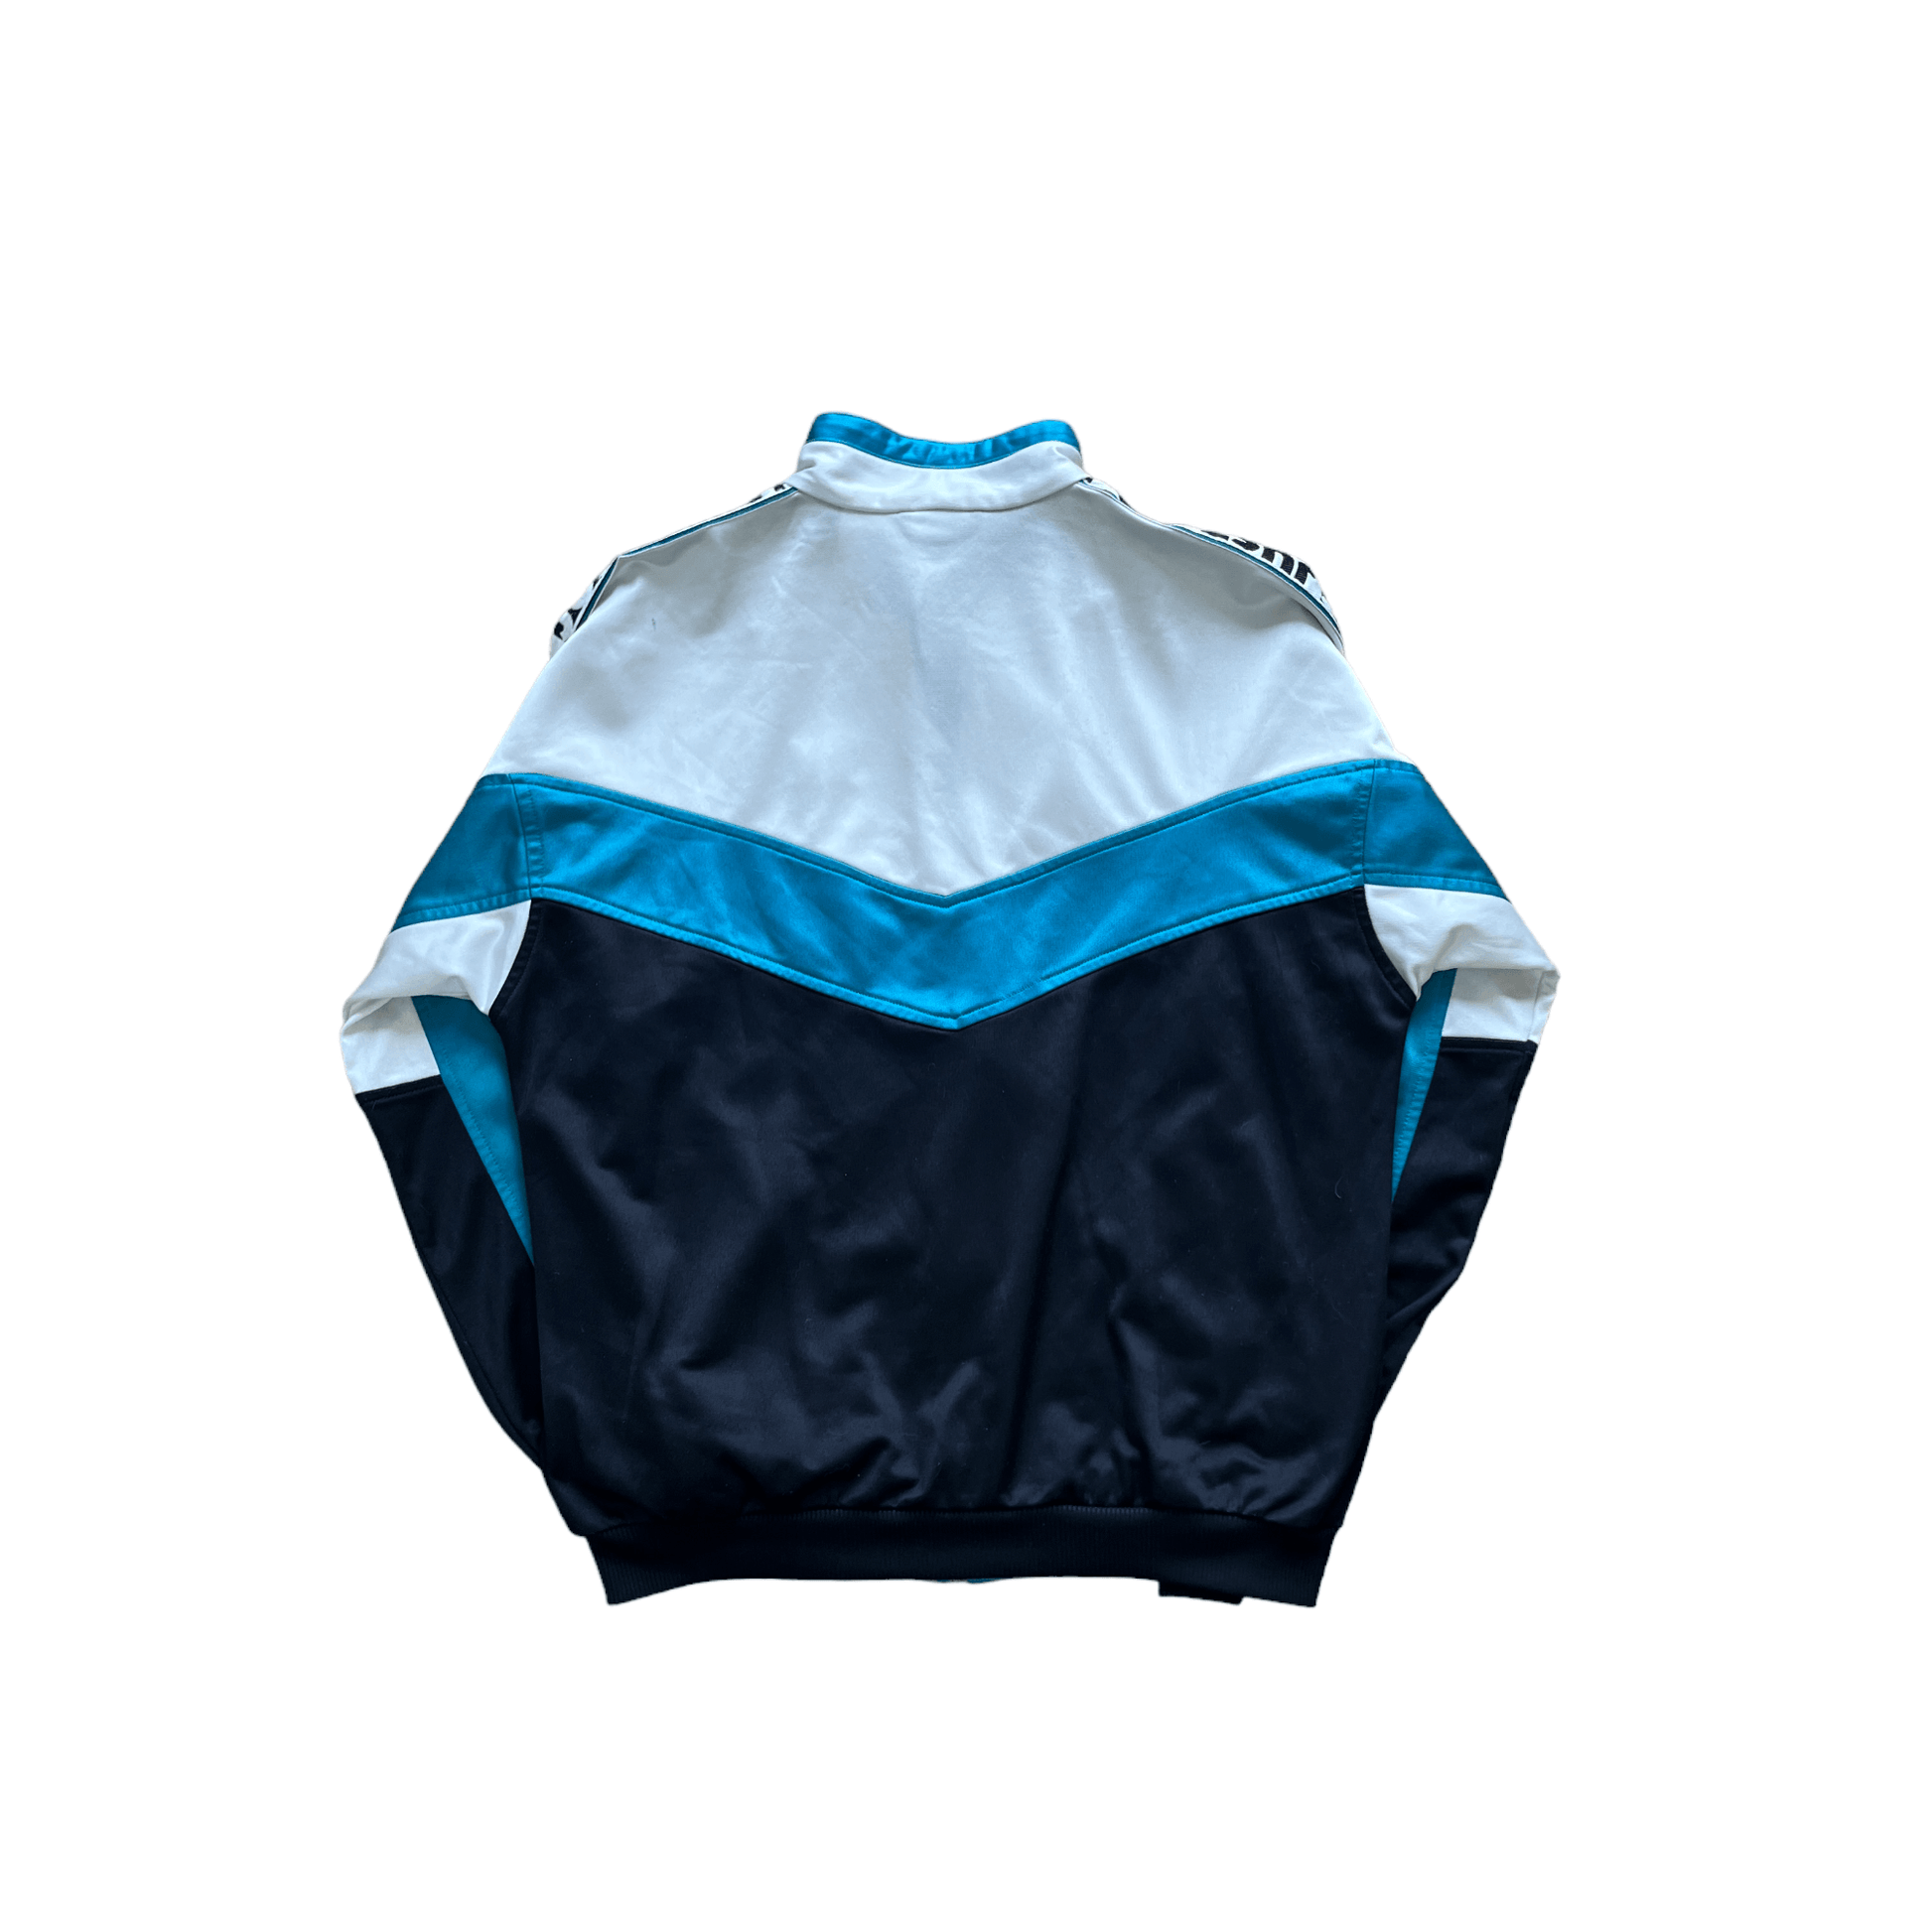 Vintage 90s Blue + White Nike Jacket - Small - The Streetwear Studio